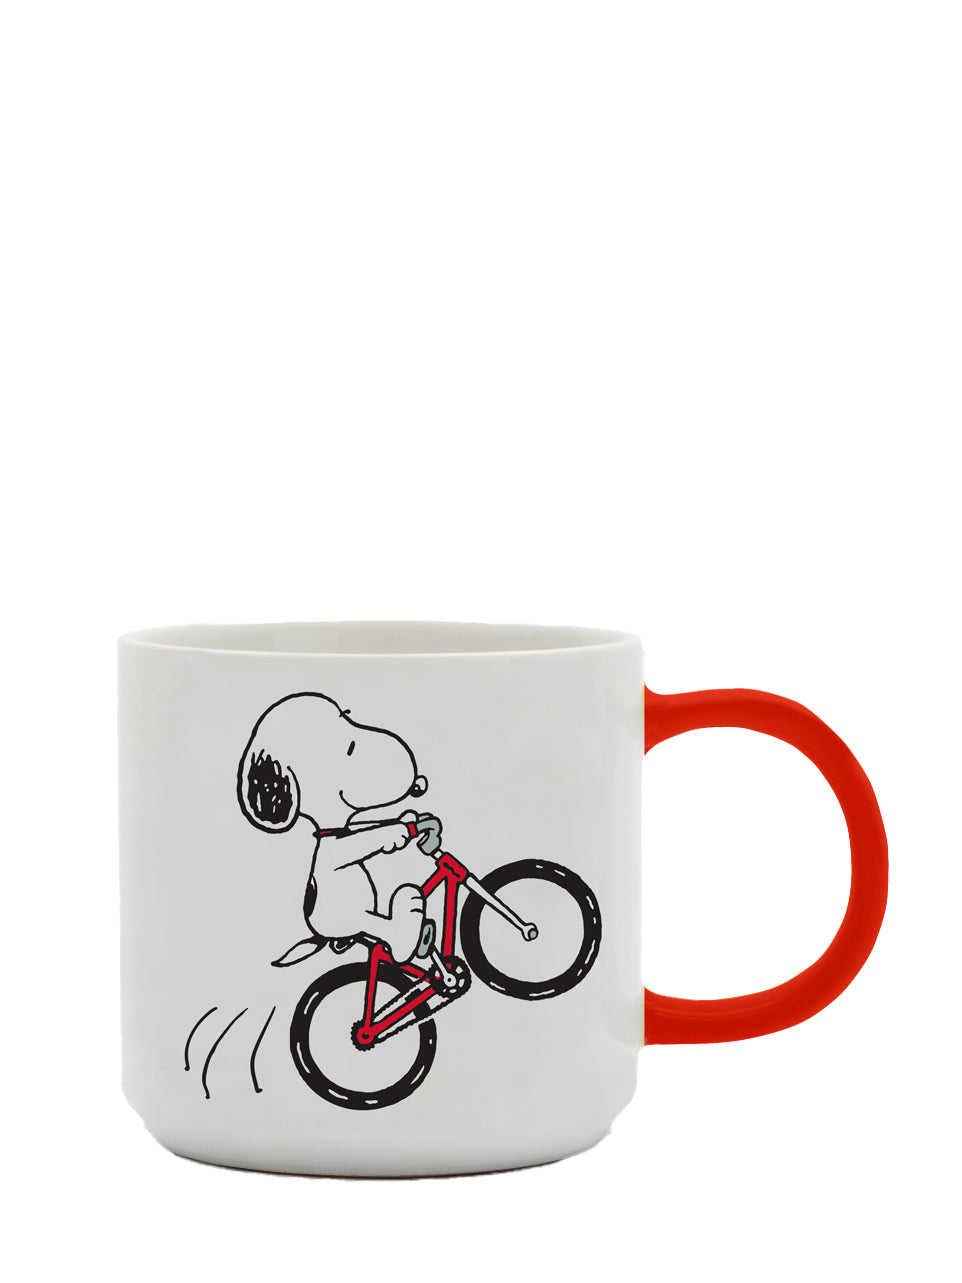 Peanuts mug, Born To Ride